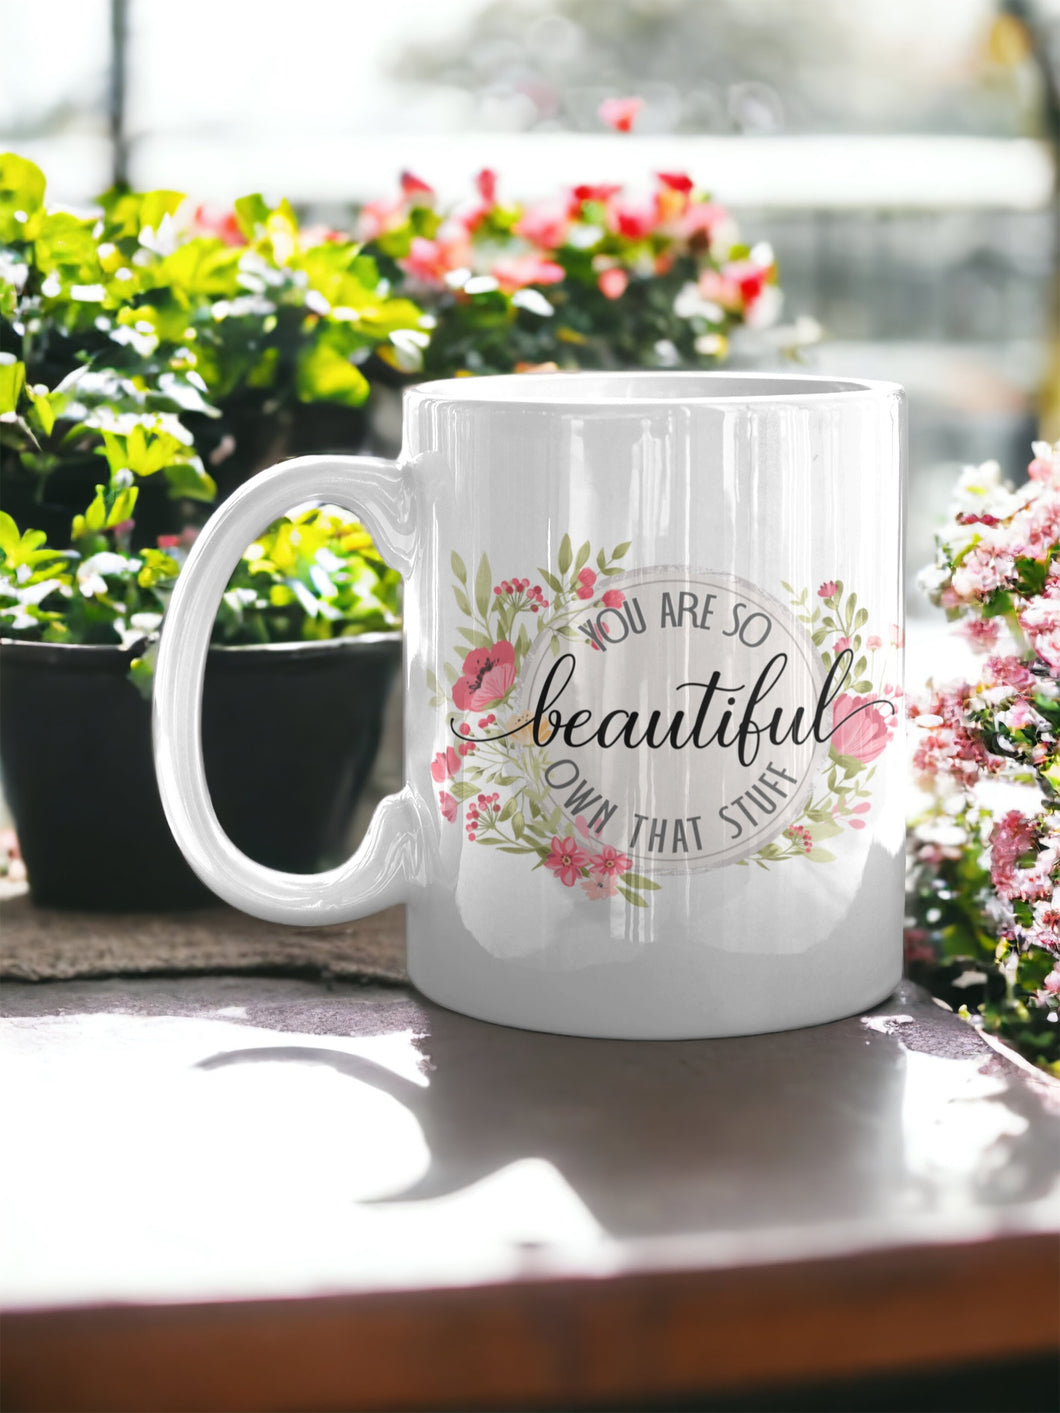 You are Beautiful Ceramic Mug